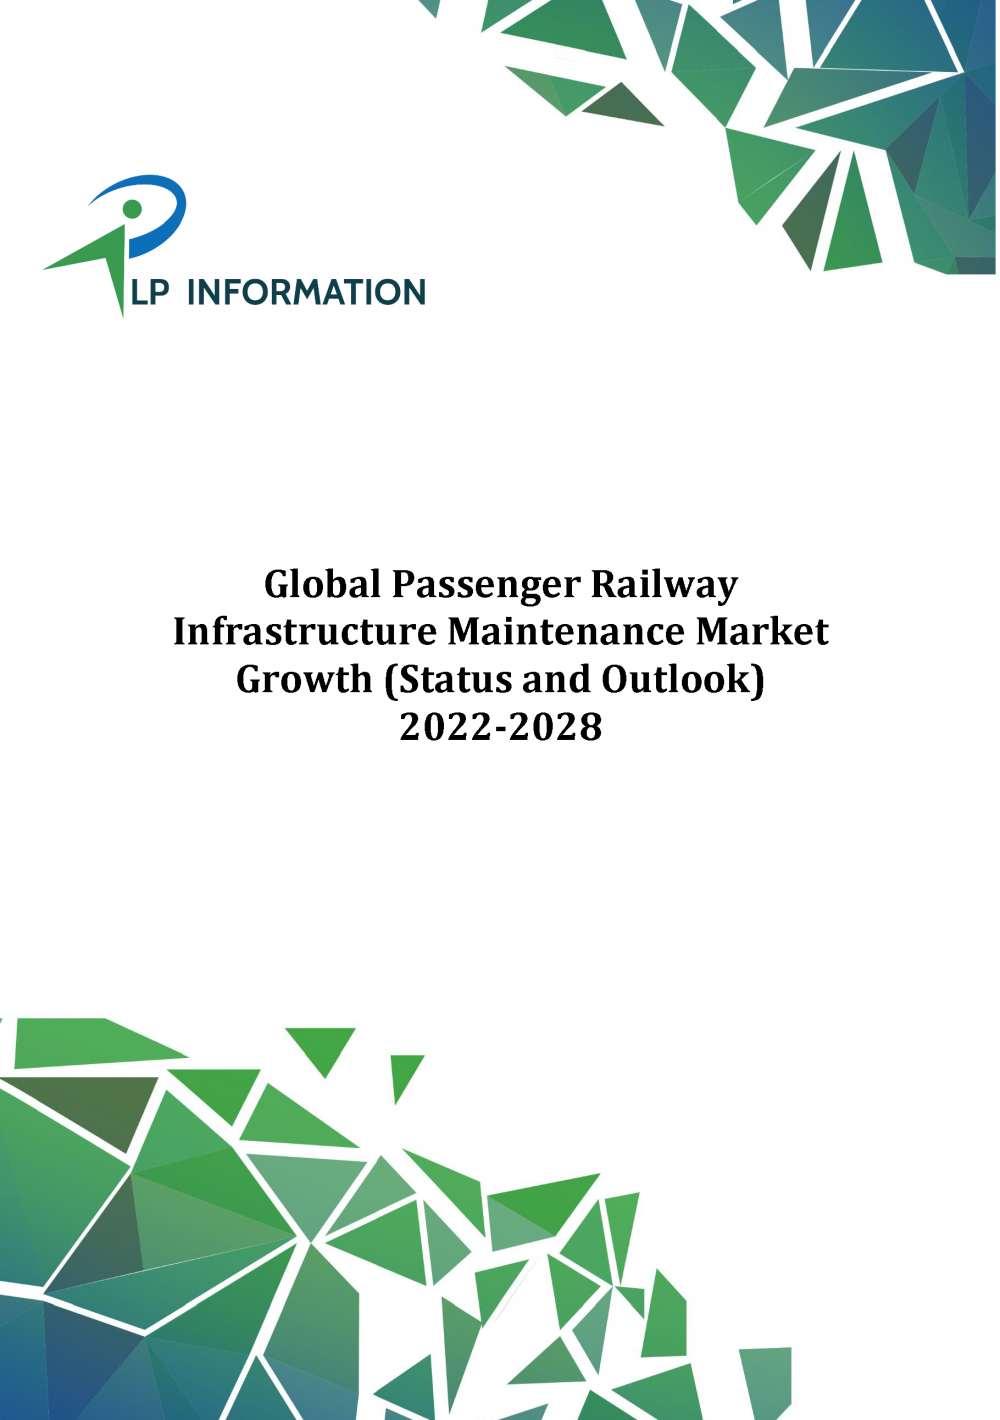 Global Passenger Railway Infrastructure Maintenance Market Growth 2022-2028